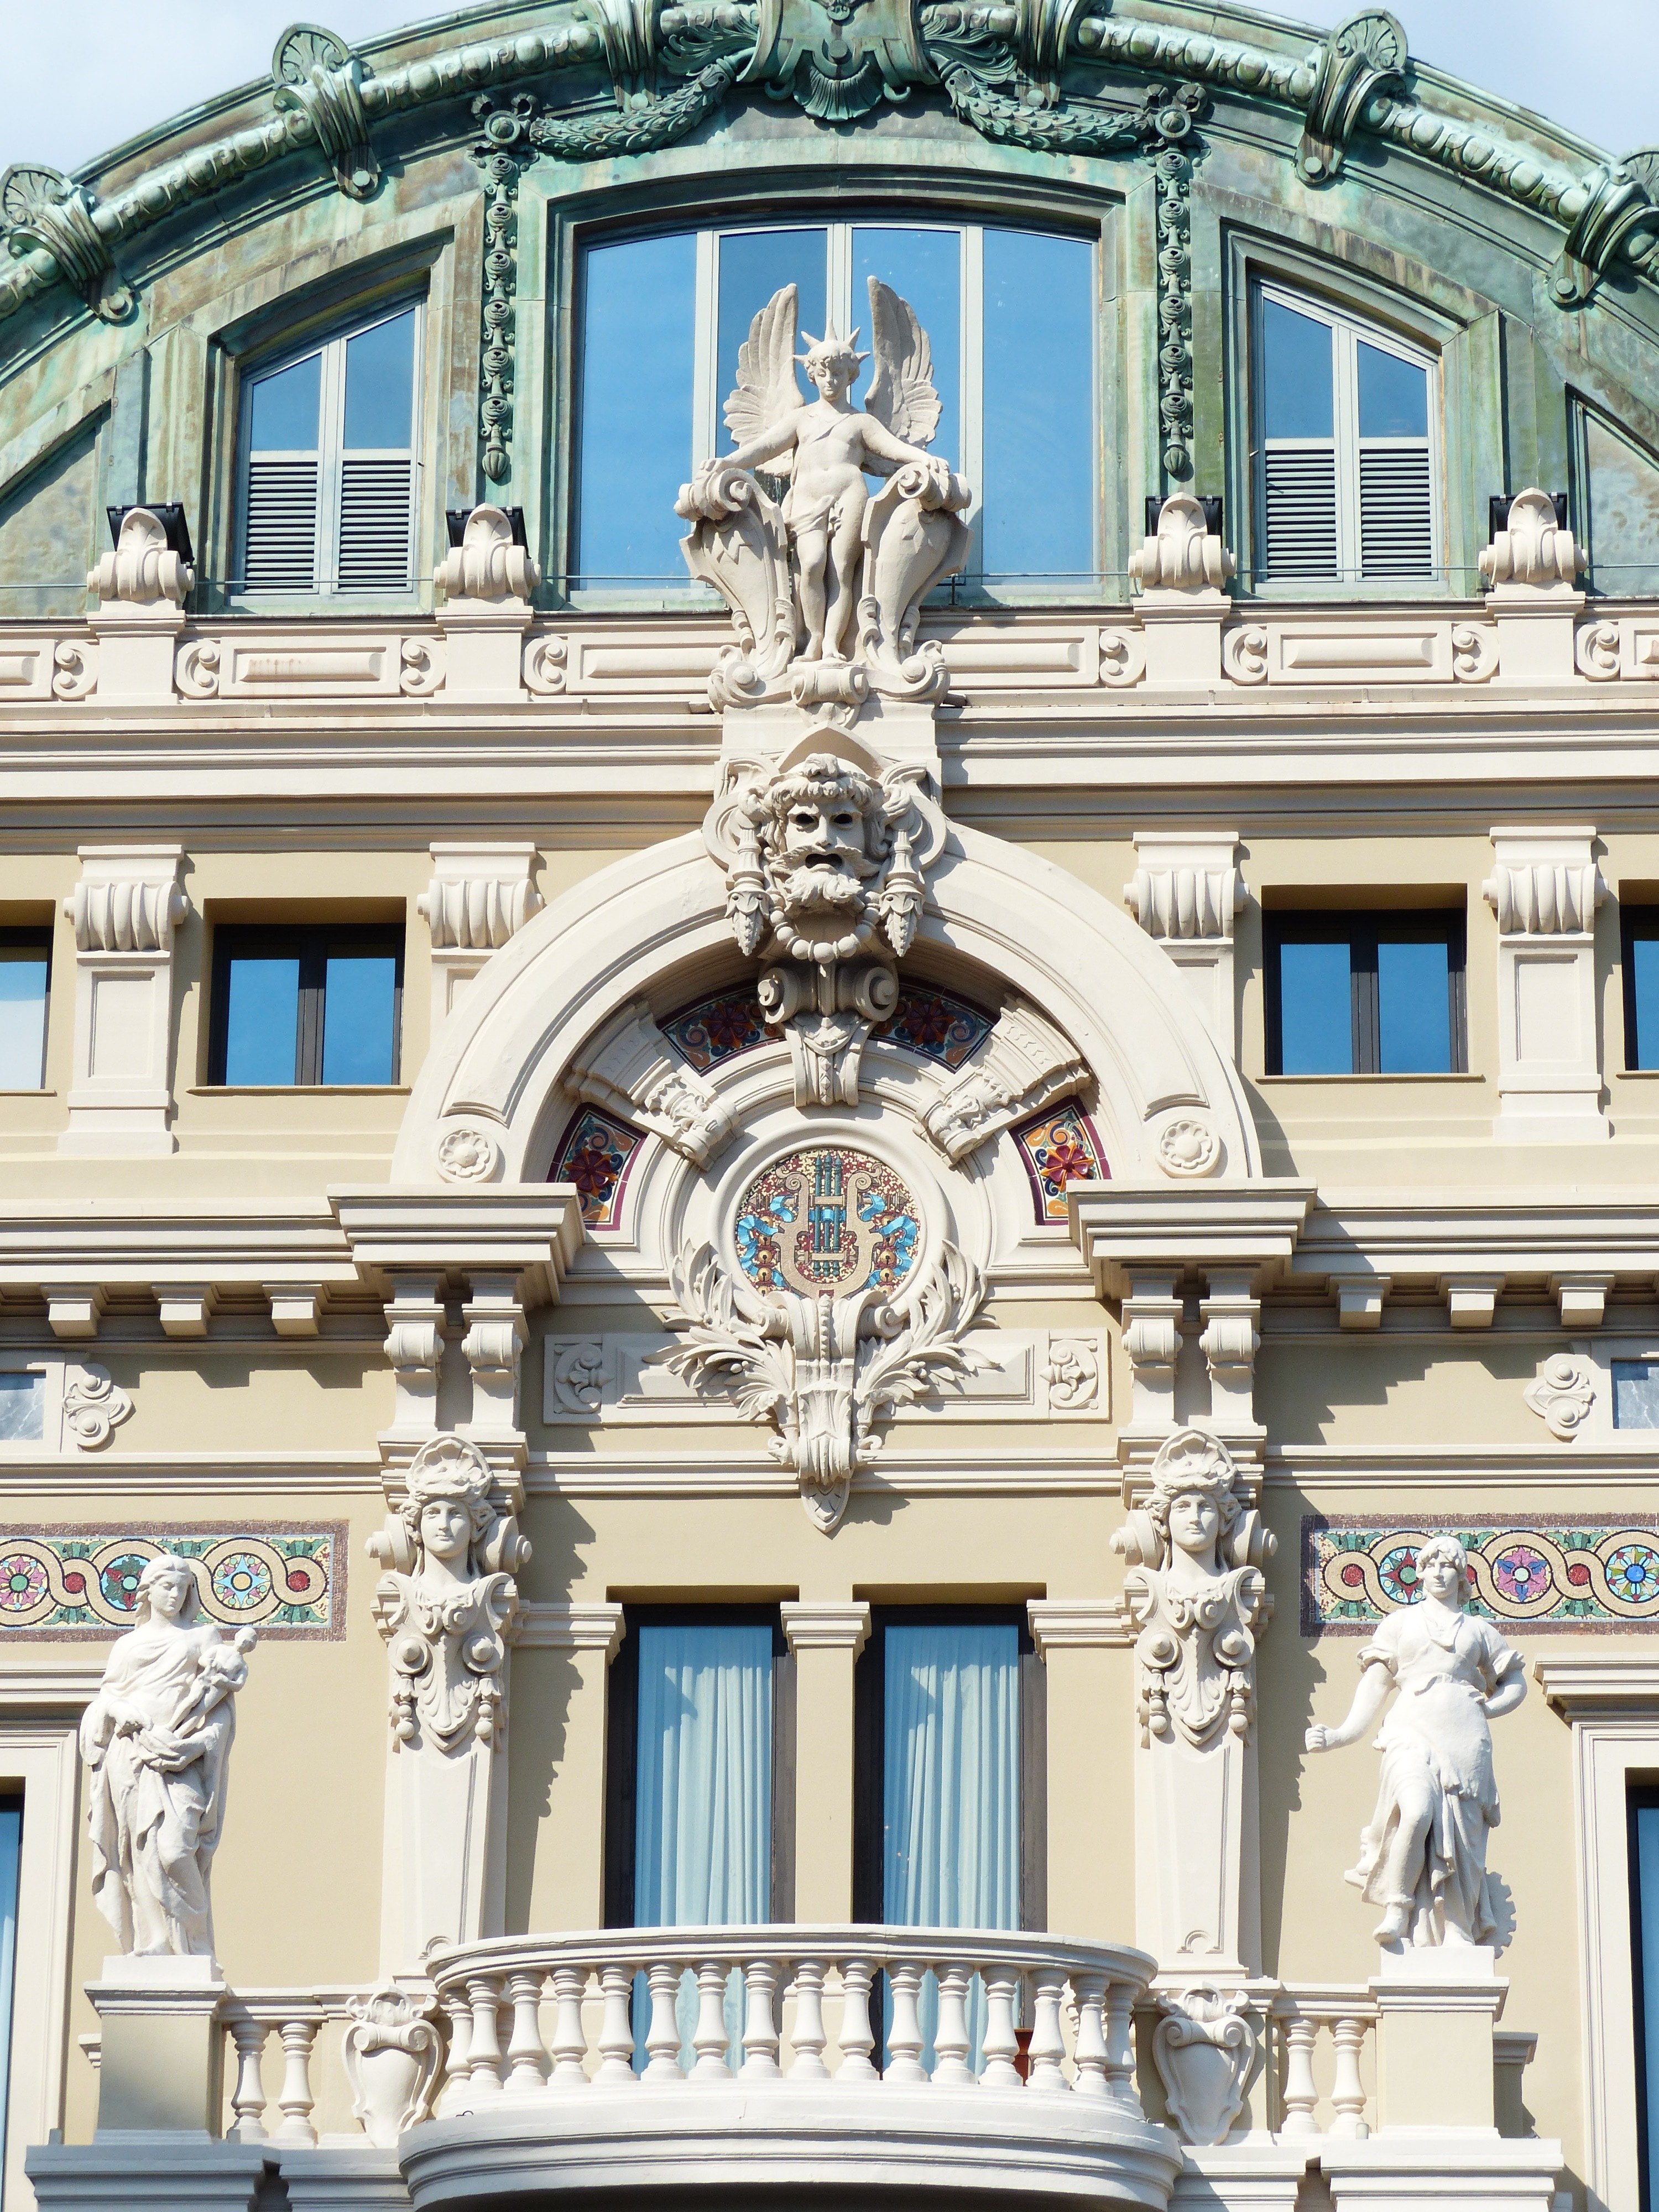 Facade, Game Bank, Casino, Monte Carlo, architecture, low angle view